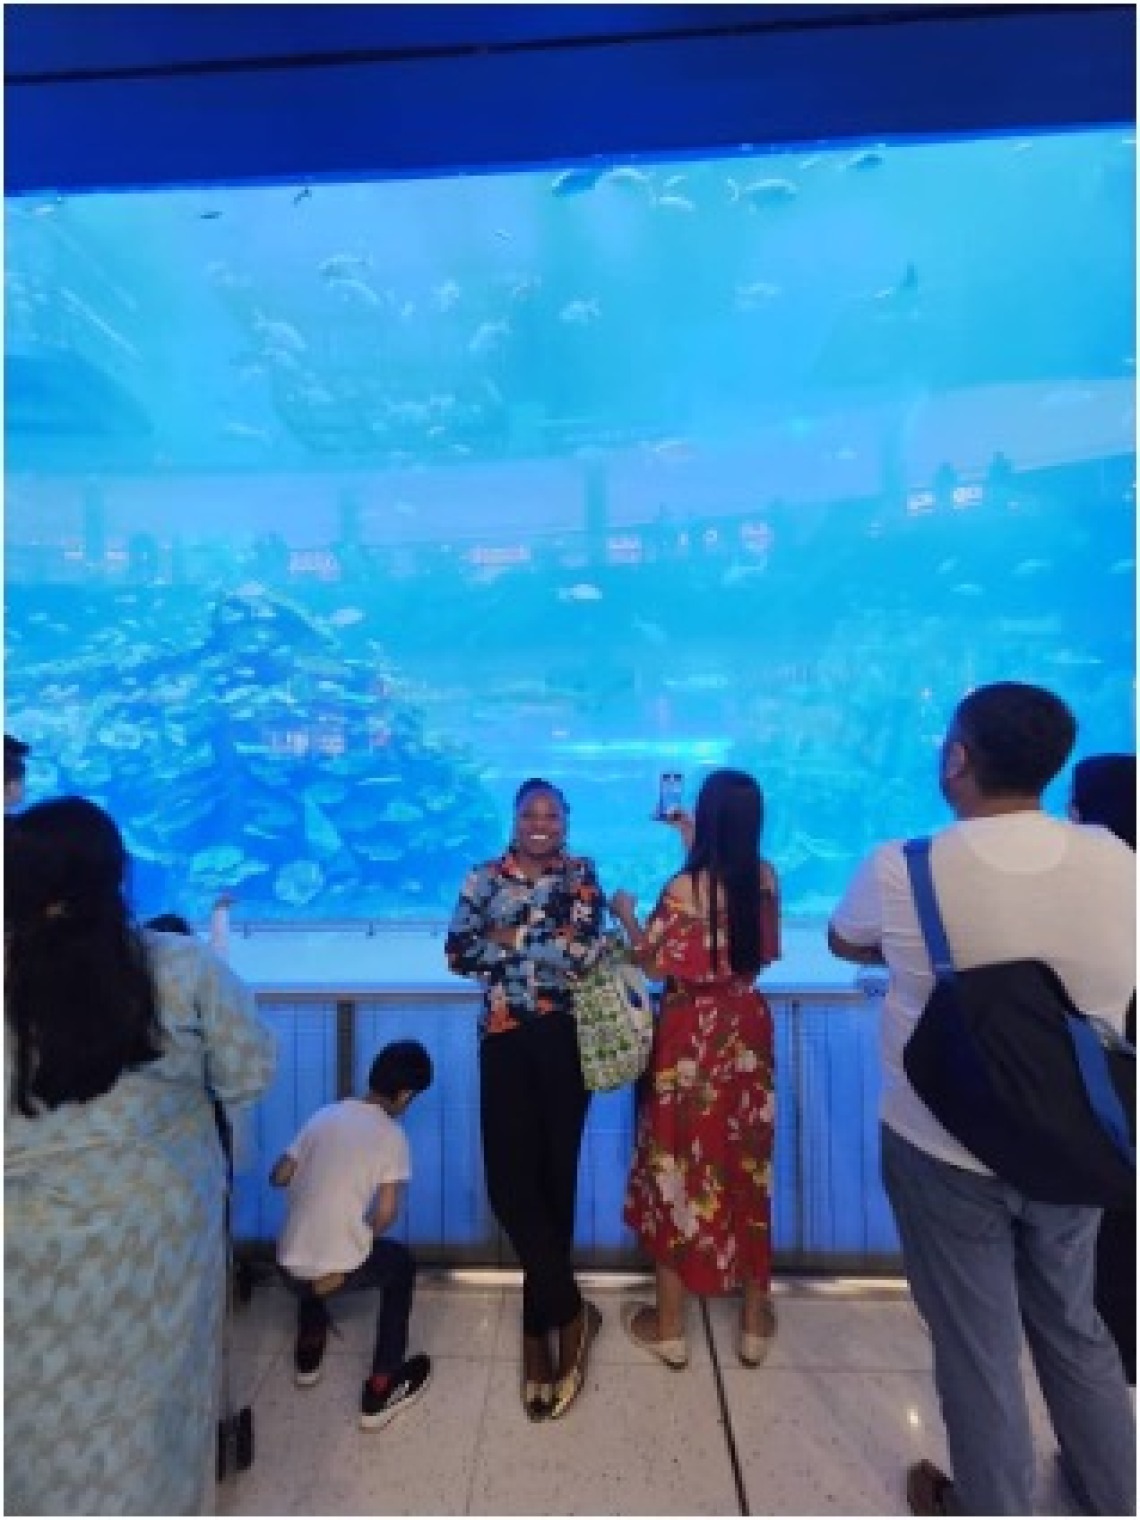 At an aquarium at the Dubai Mall